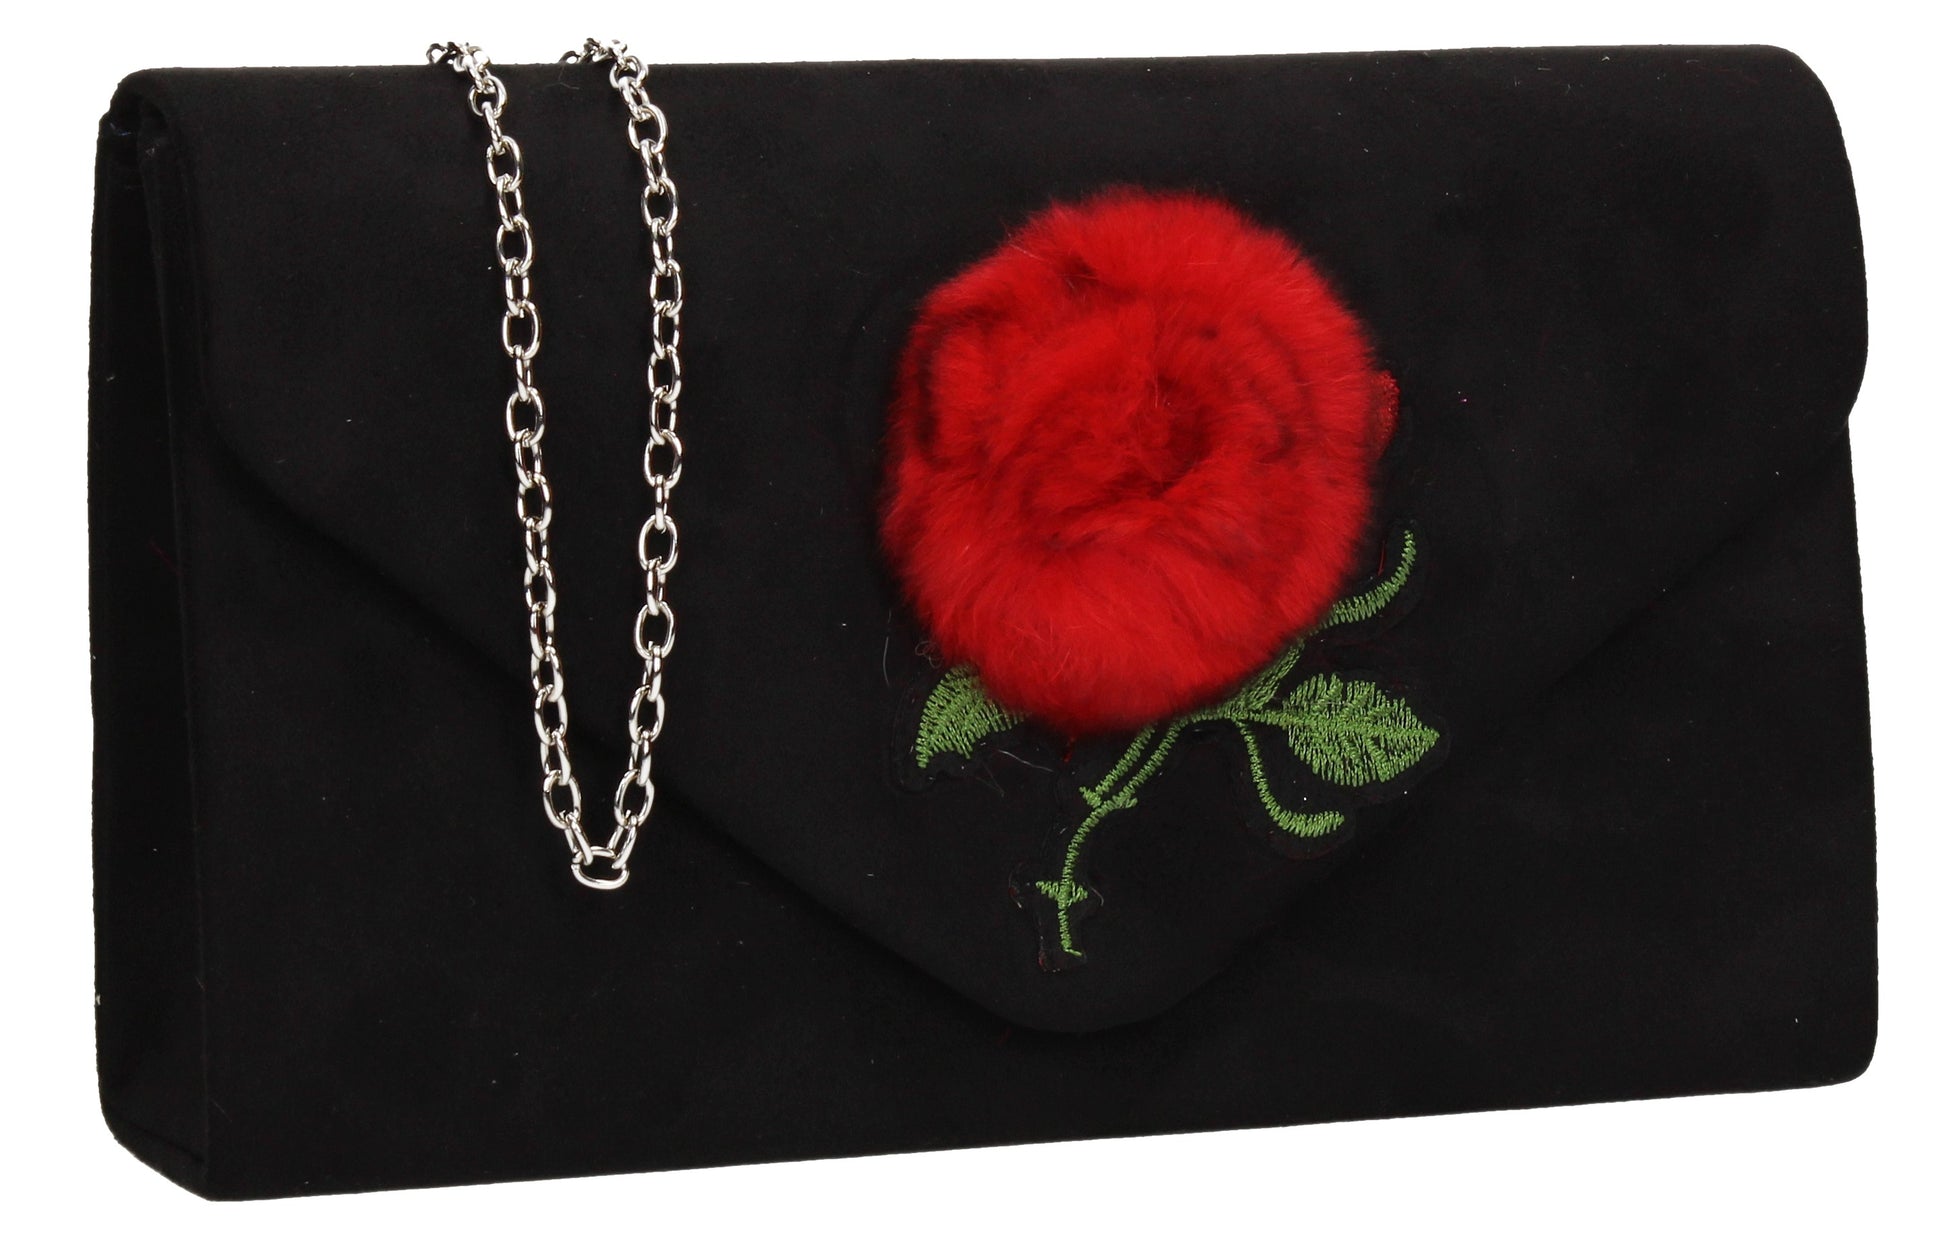 SWANKYSWANS Roxanne Fur Rose Clutch Bag Black Cute Cheap Clutch Bag For Weddings School and Work